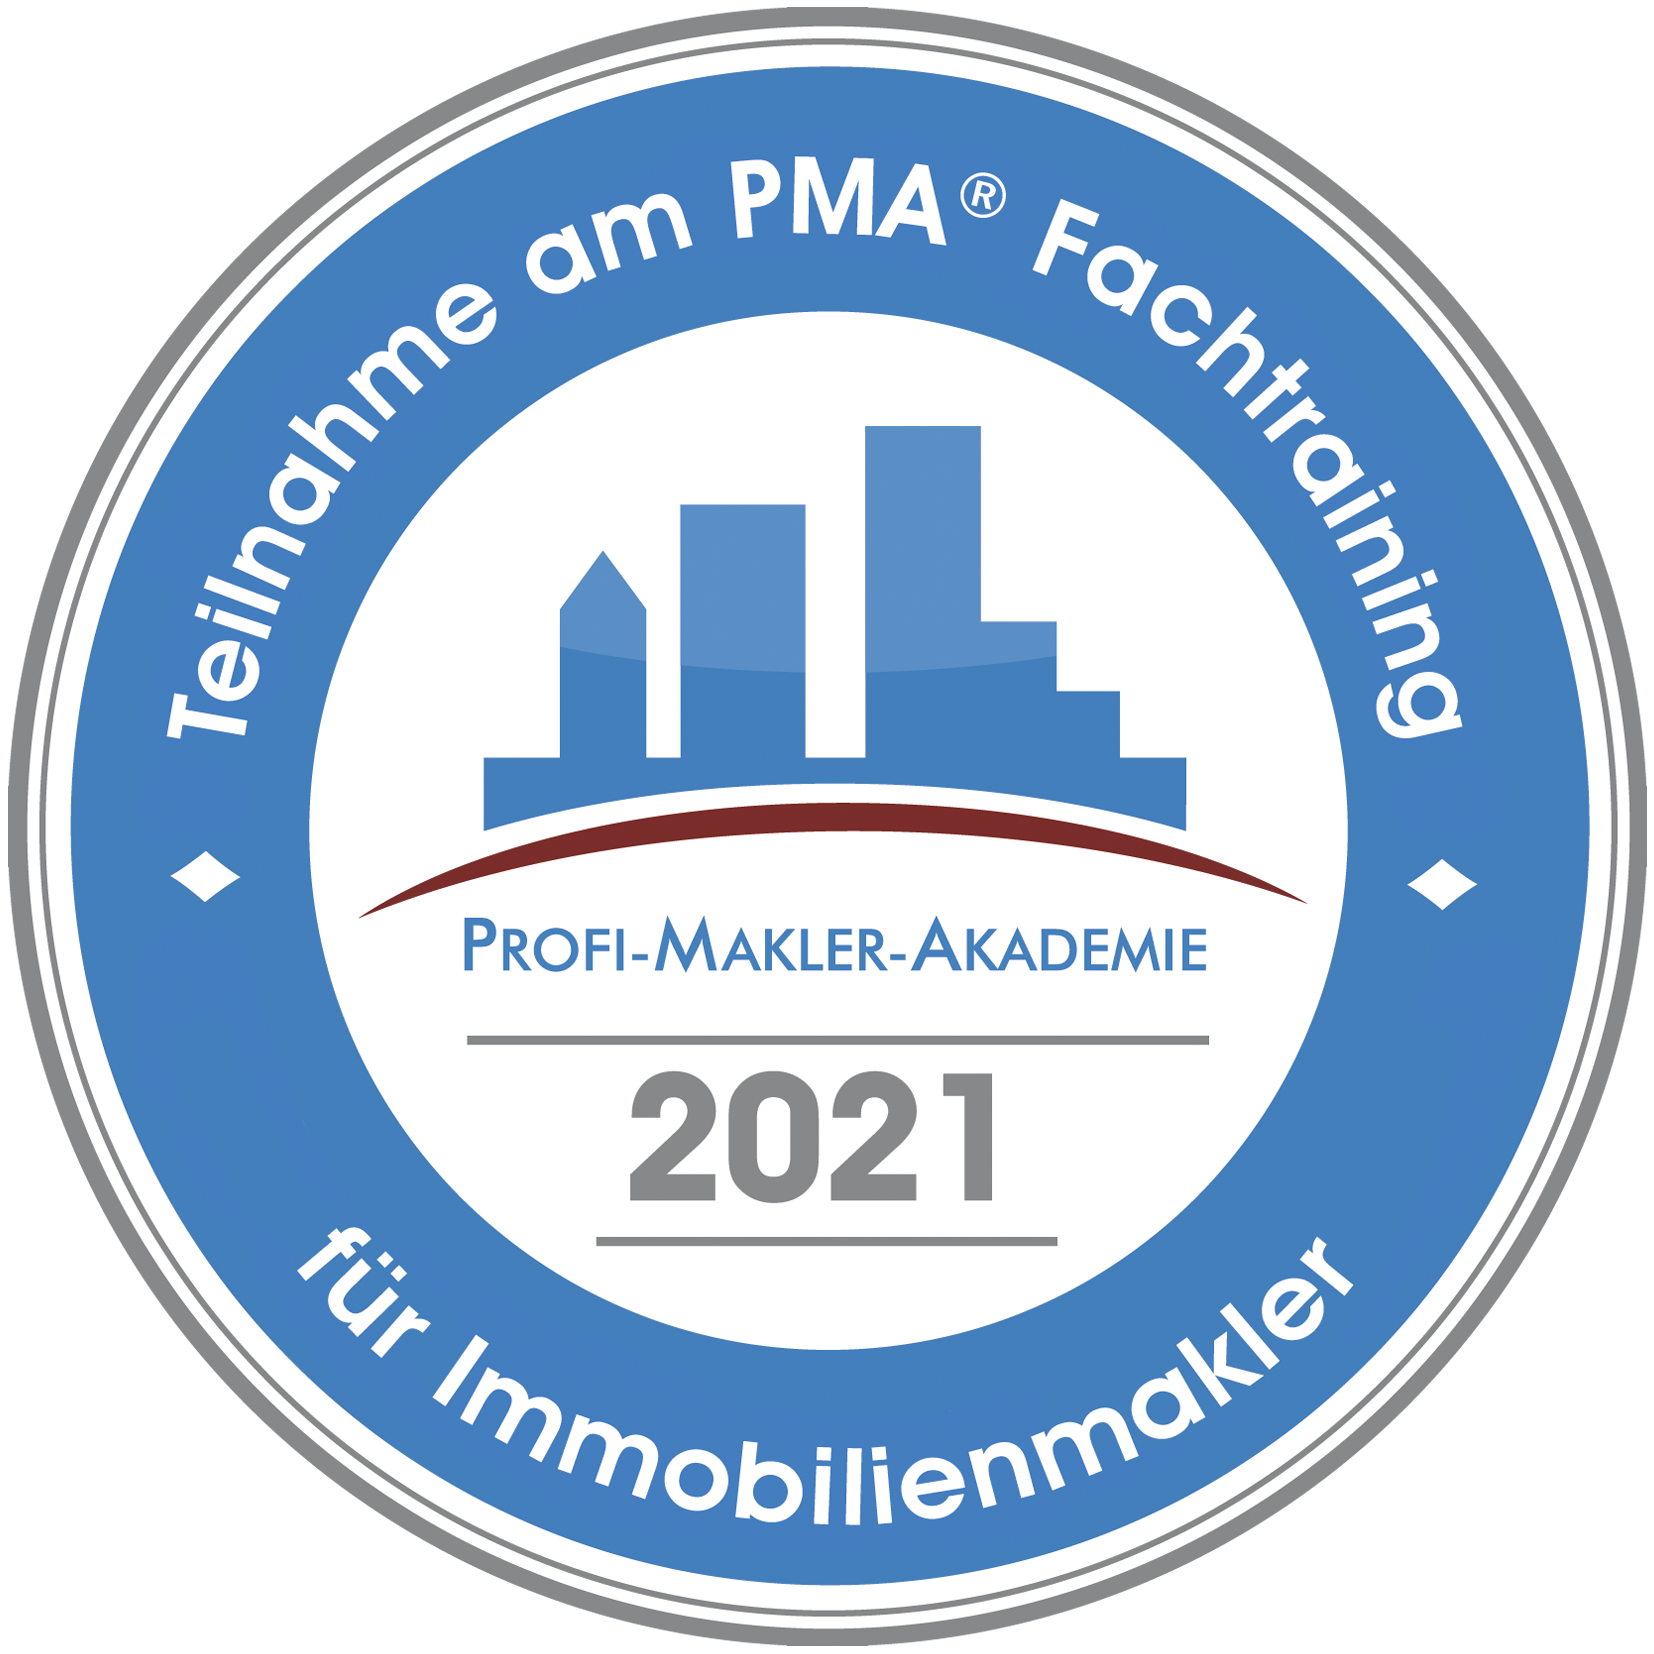 Emblem PMA Fachtraining 2021